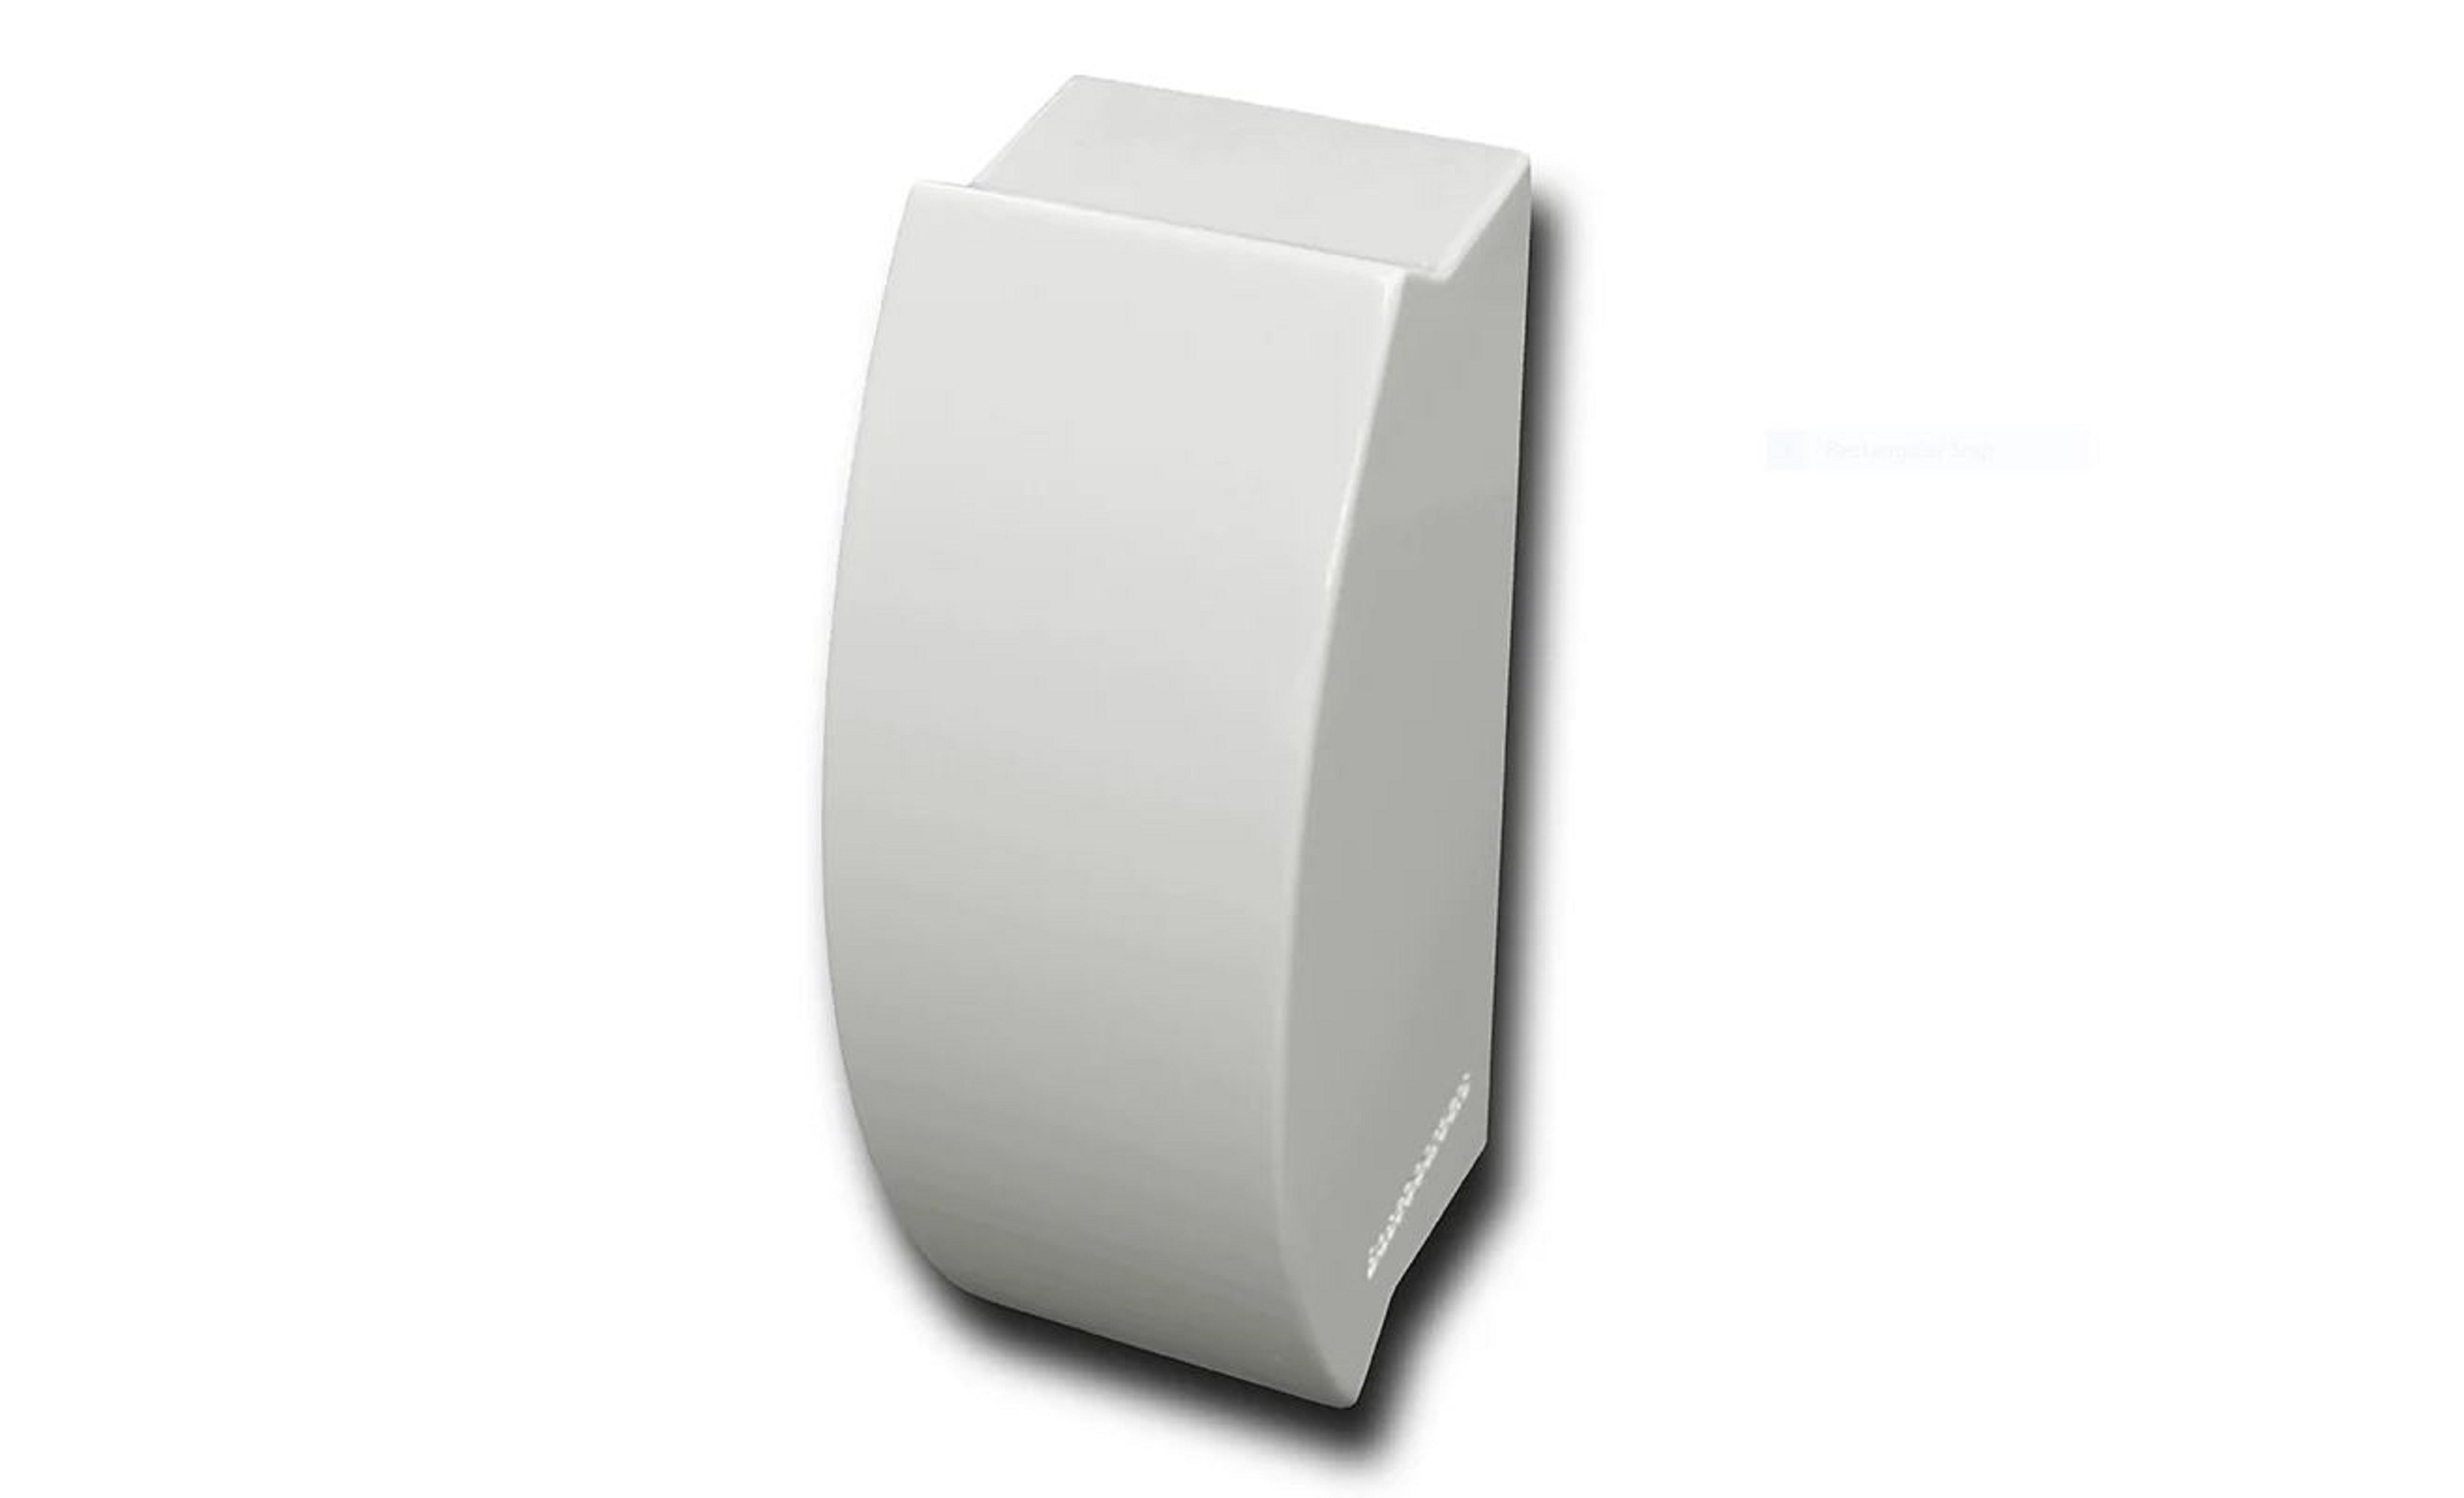 Baseboarders Elliptus Steel Easy Slip-On Baseboard Heater Cover Inside  90-Degree Corner - White